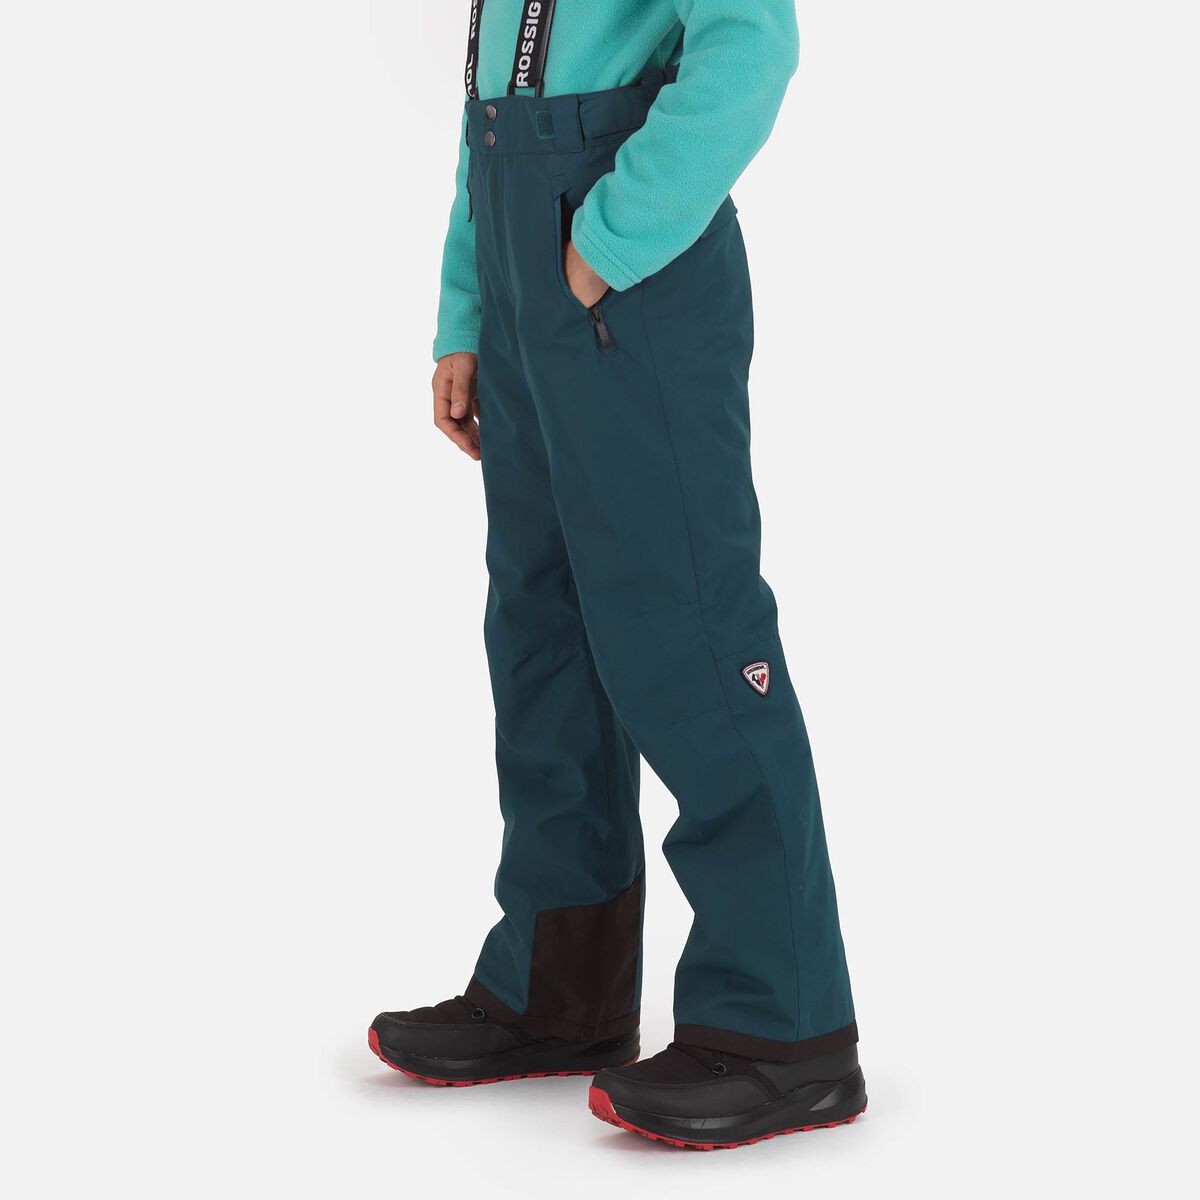 Pantalones de esquí Hiver para niño